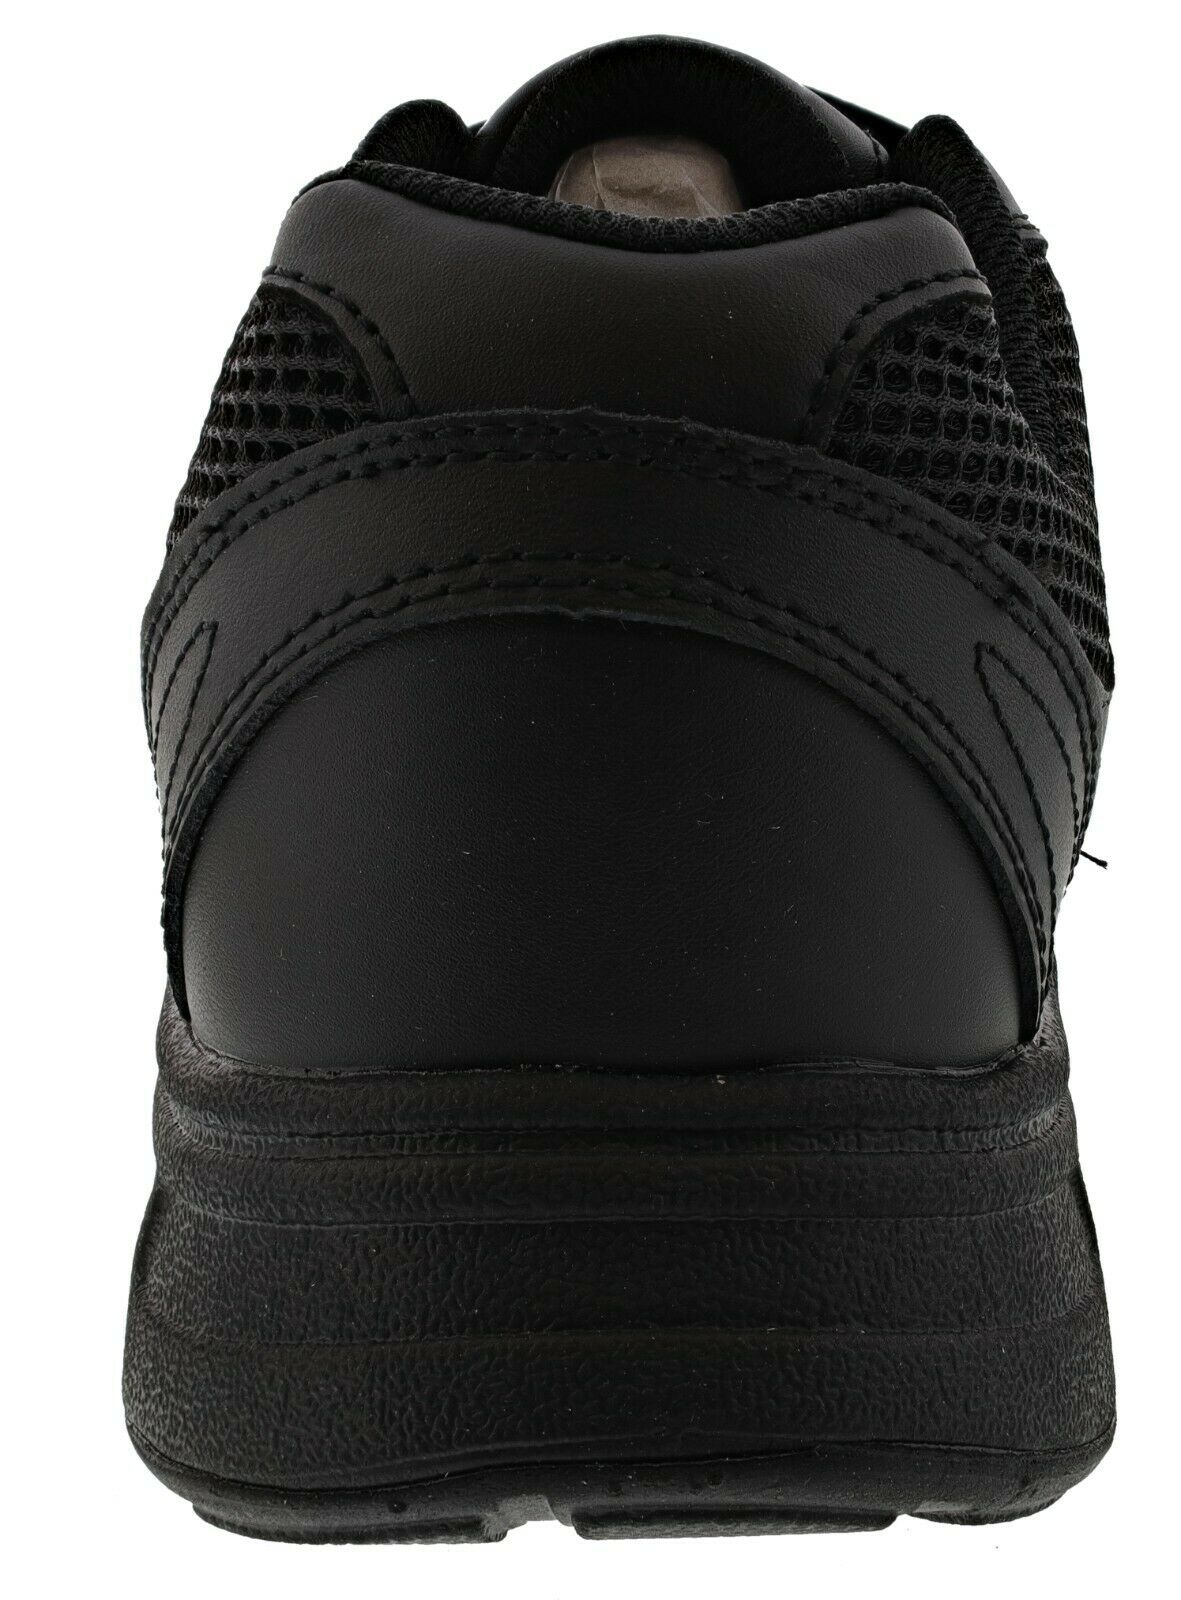 Dr Scholl’s Men’s Brisk Dual Strap Wide Width Walking Shoes - image 4 of 6